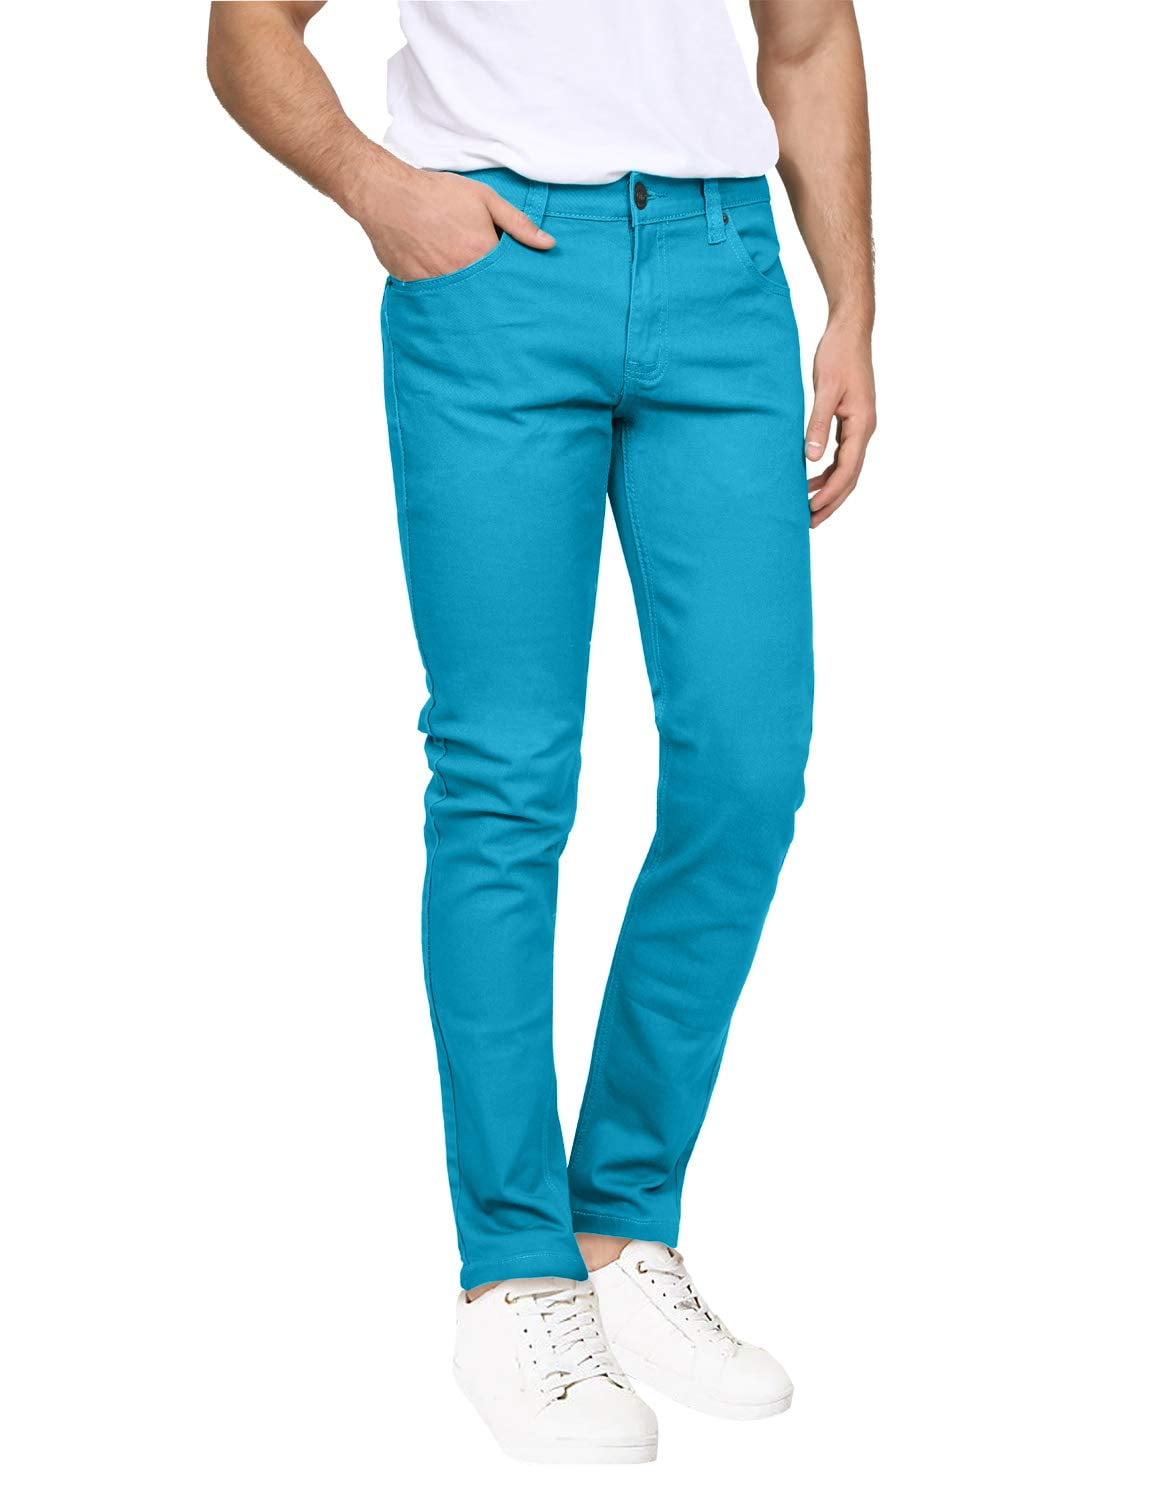 J. METHOD Men's Skinny Jeans Stretch Slim Fit Classic Basic Solid ...